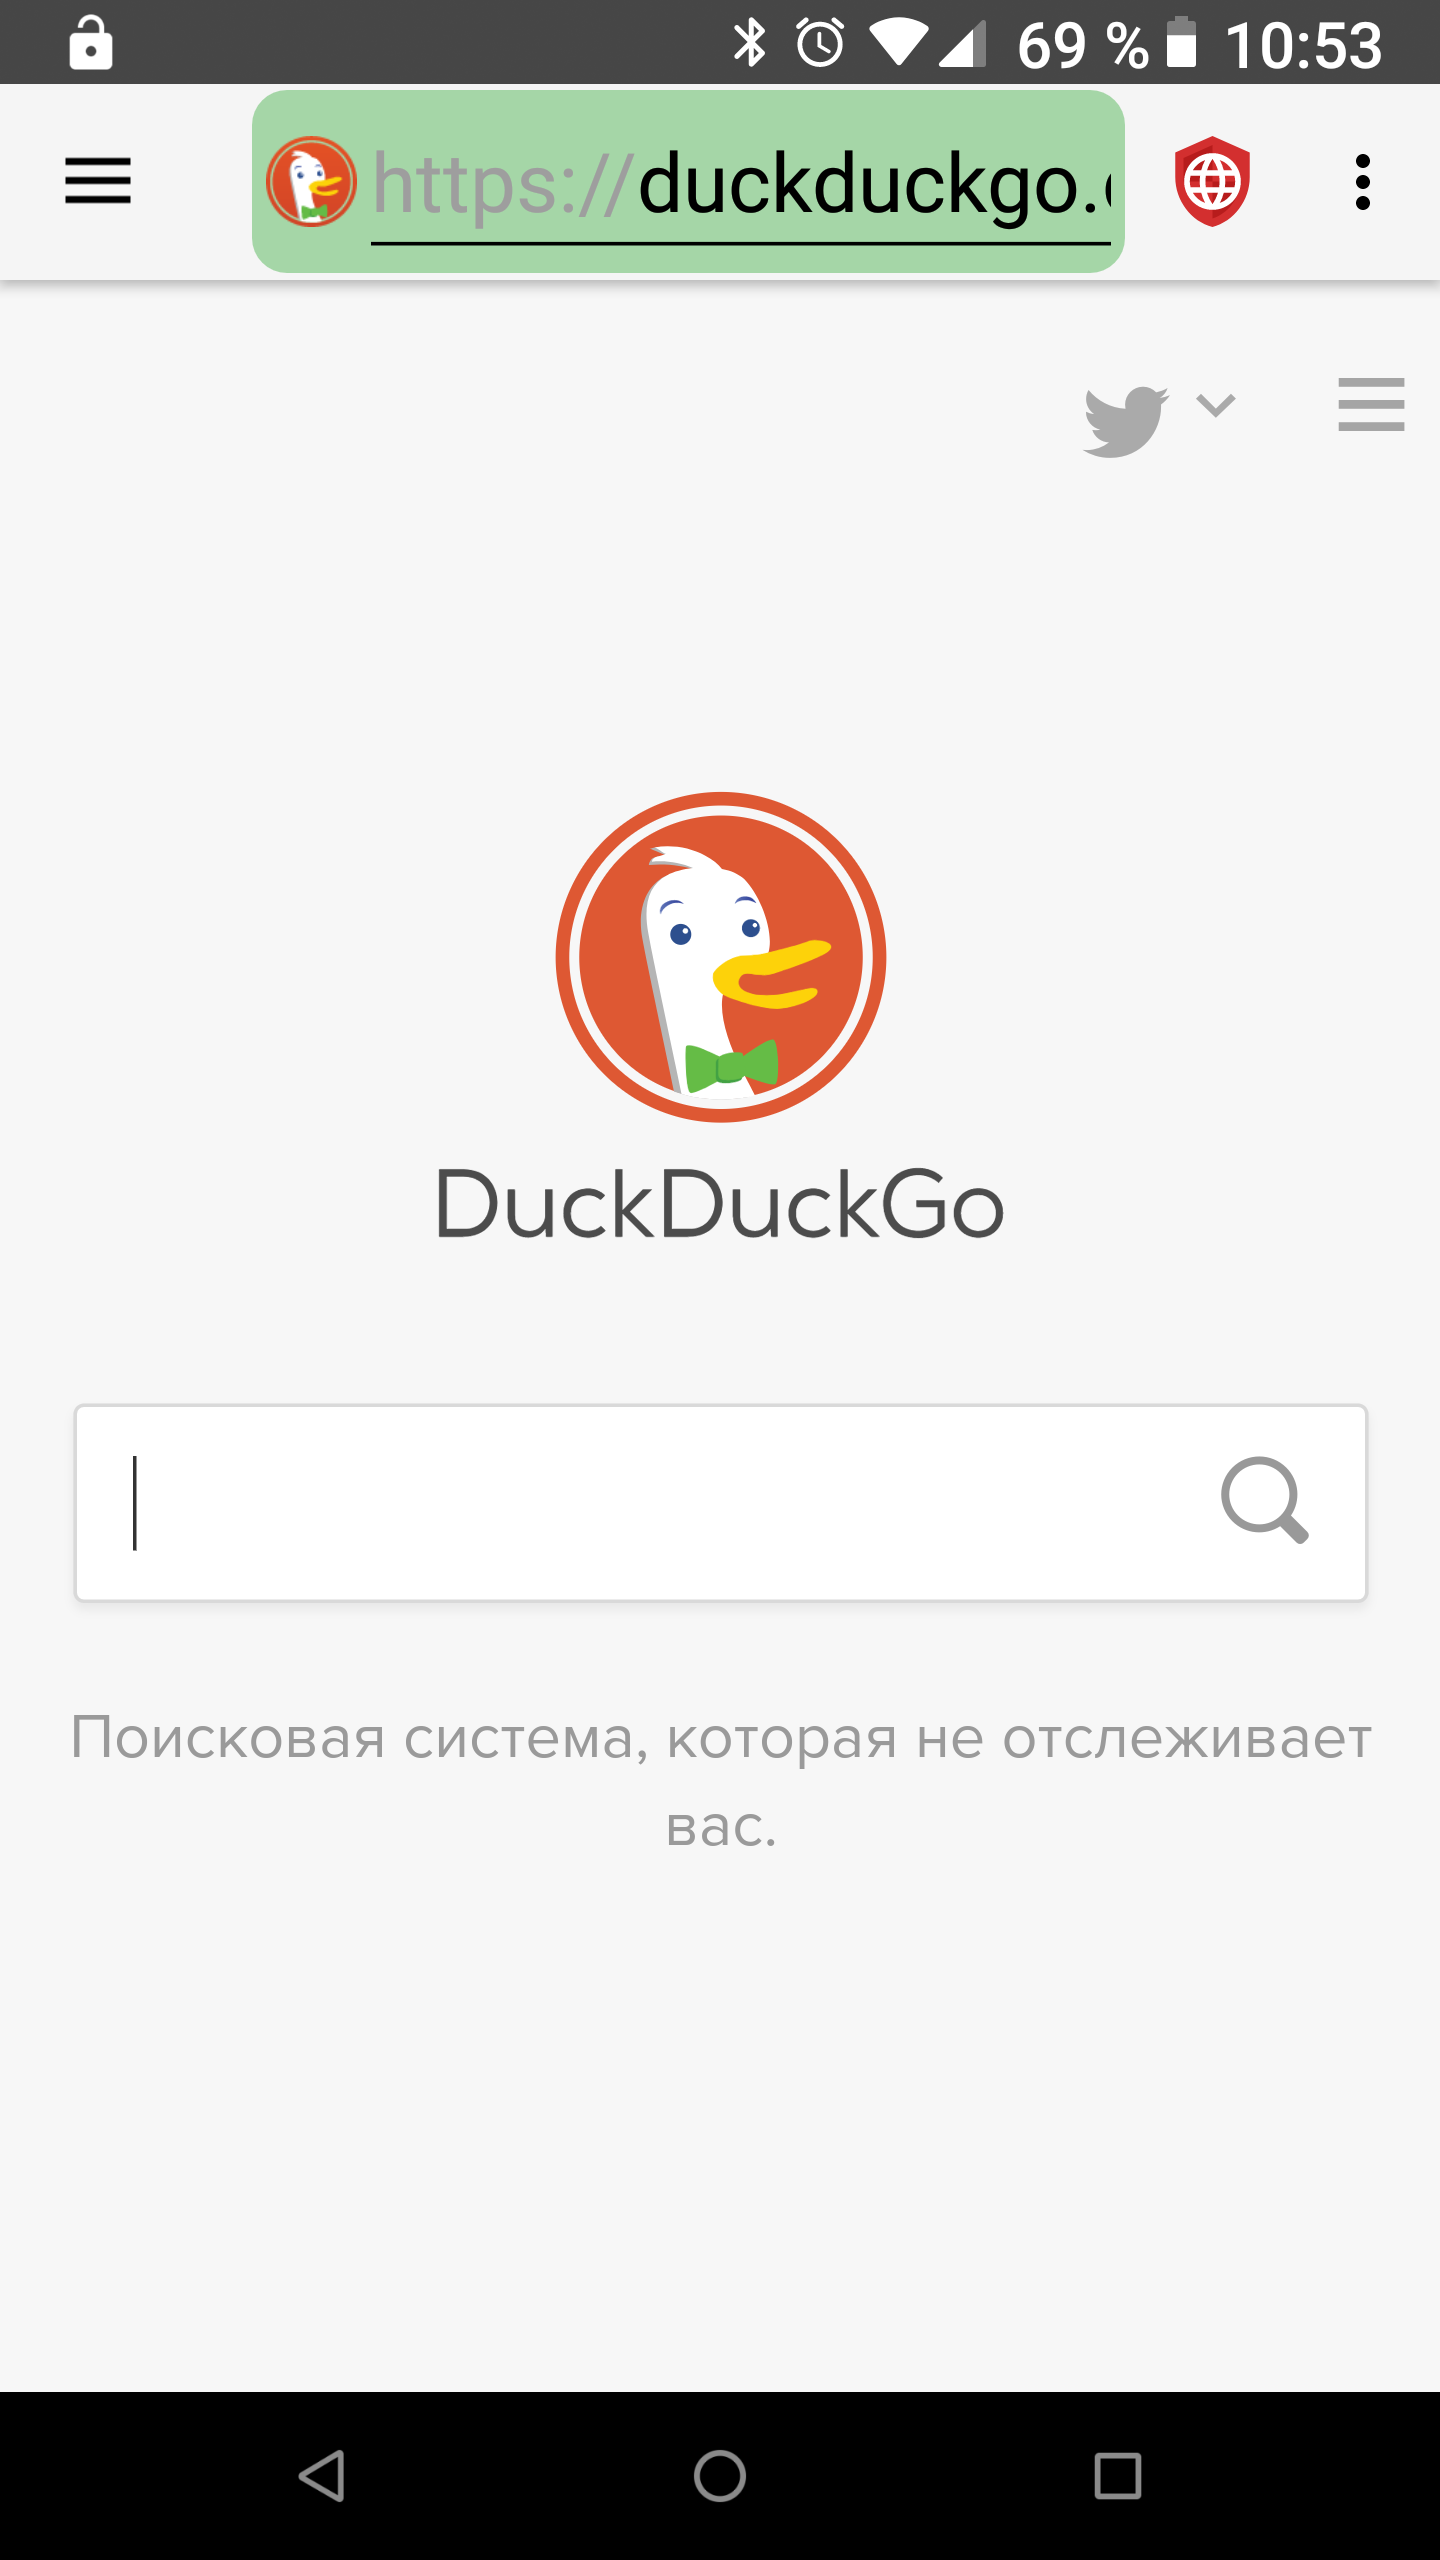 fastlane/metadata/android/ru-RU/images/phoneScreenshots/01-DuckDuckGo.png